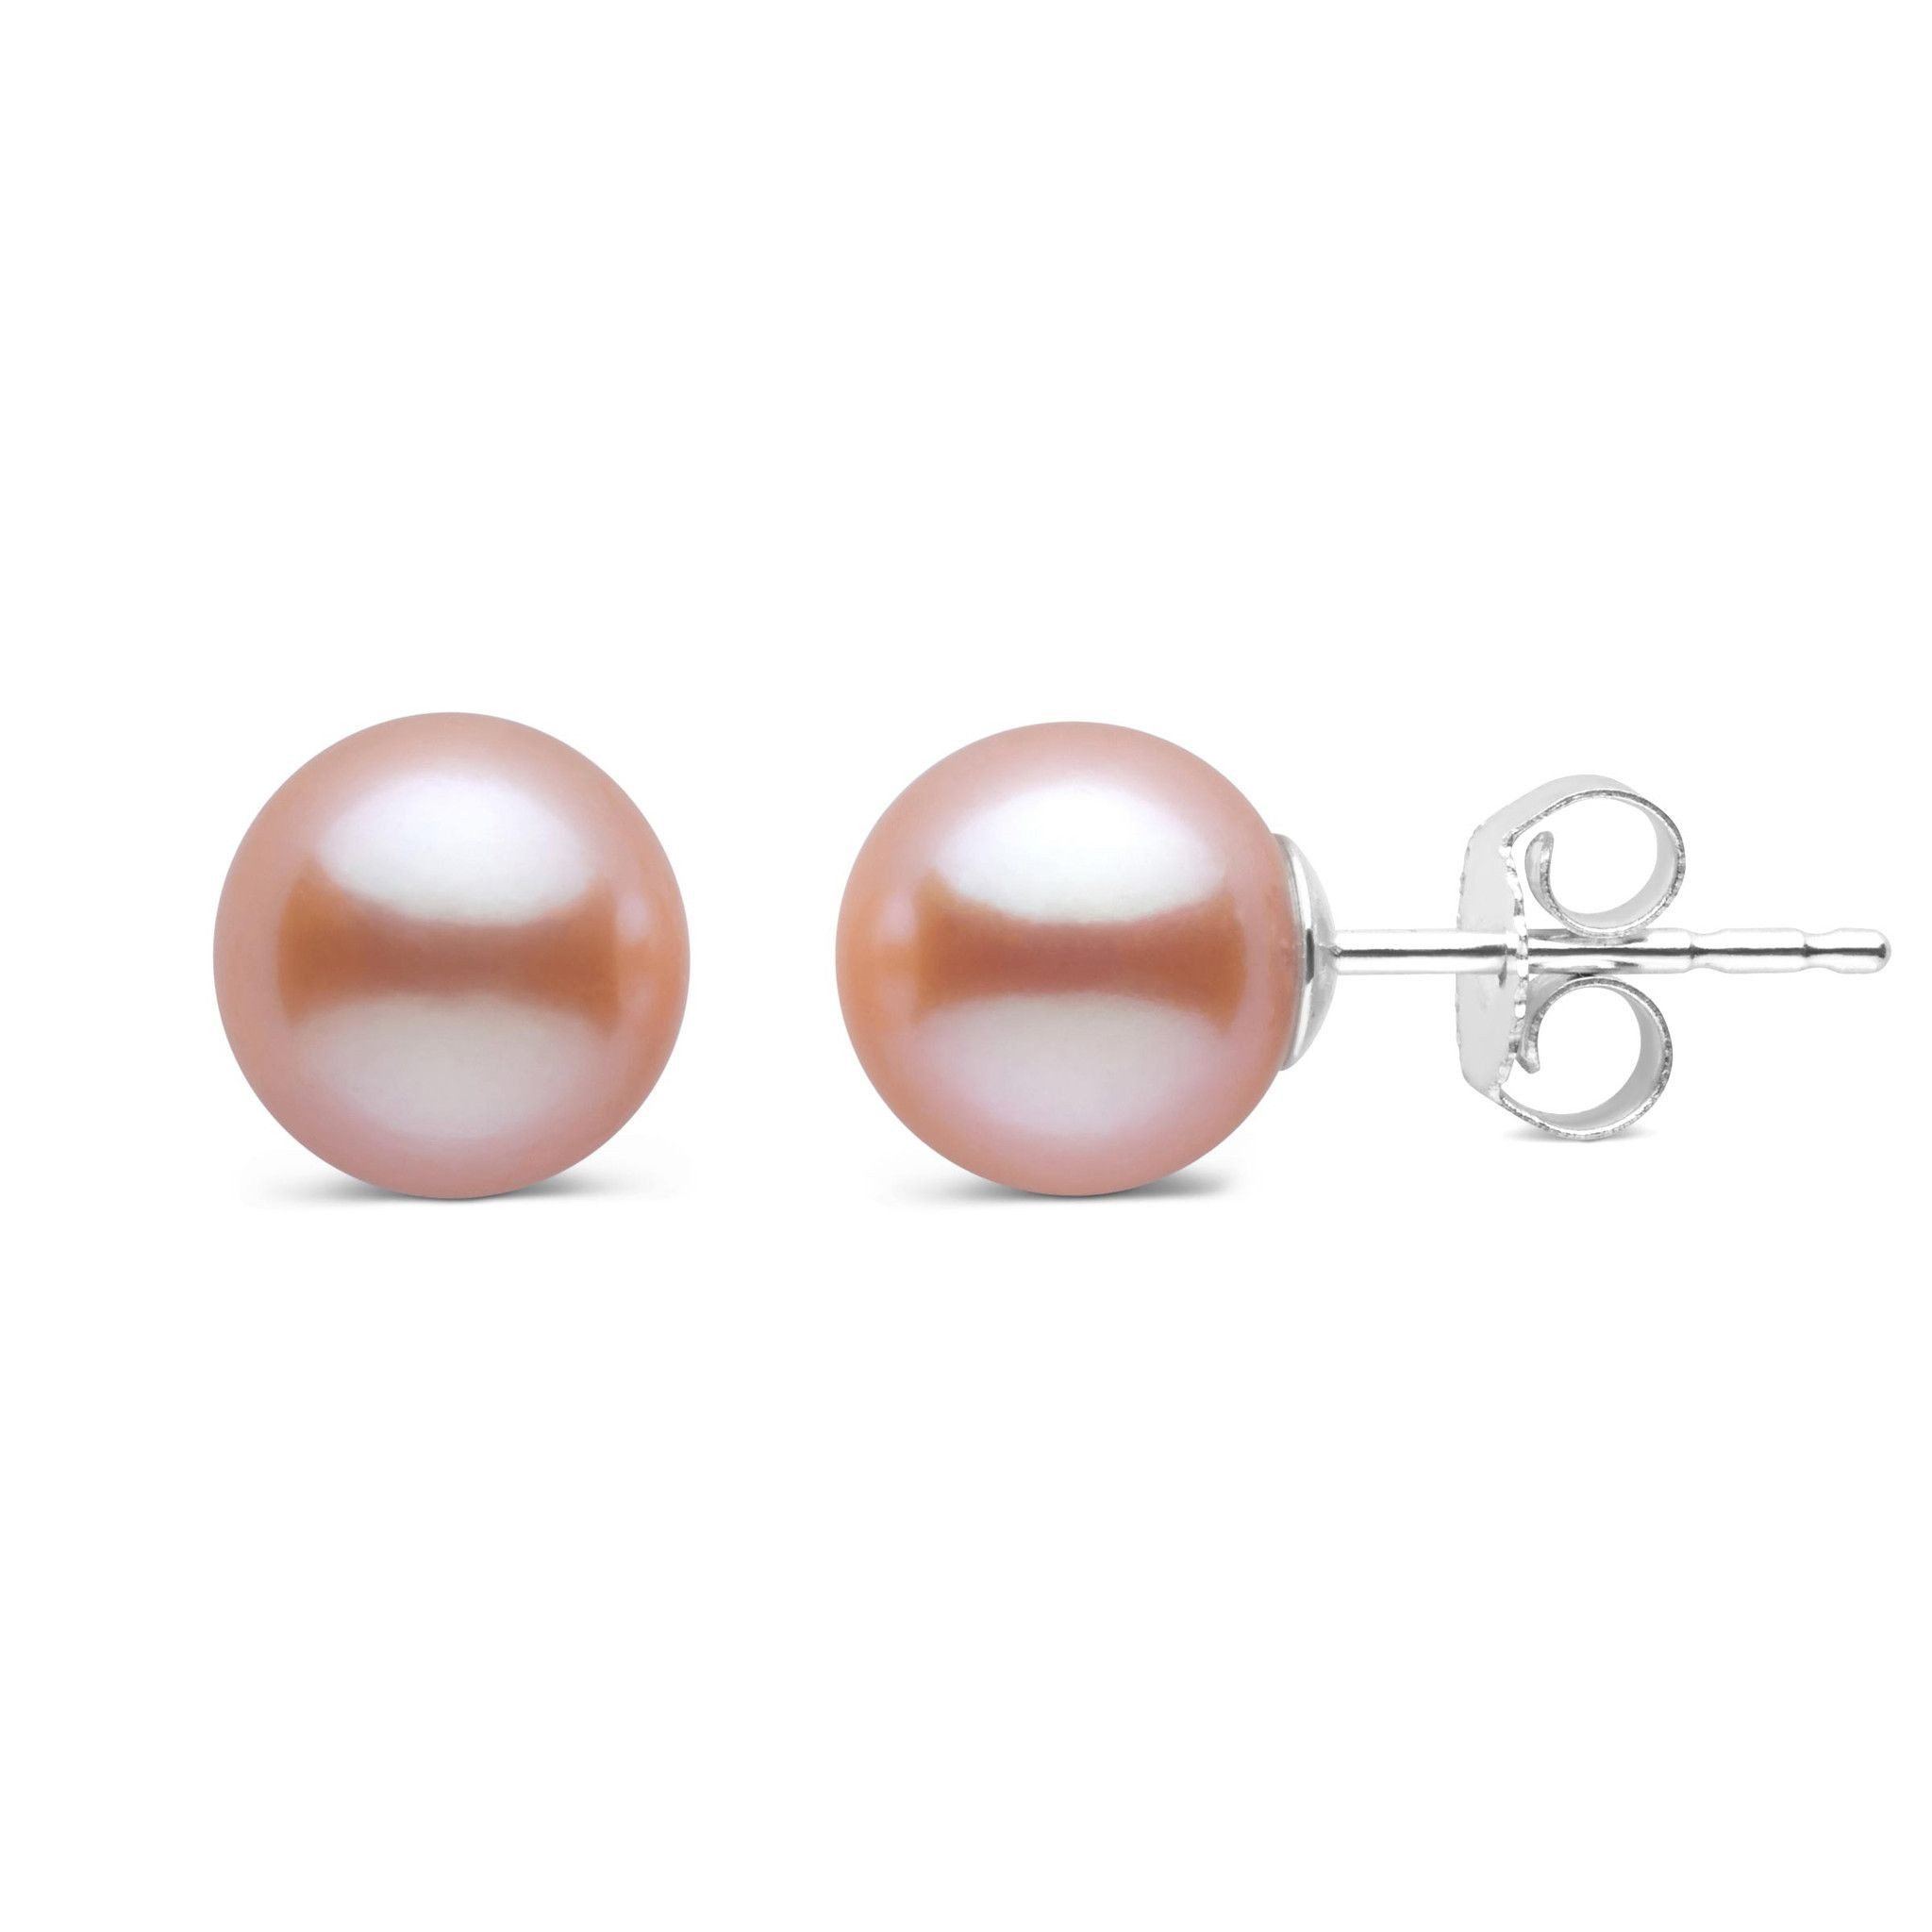 7.5-8.0 mm AAA Pink to Peach Freshwater Pearl Stud Earrings